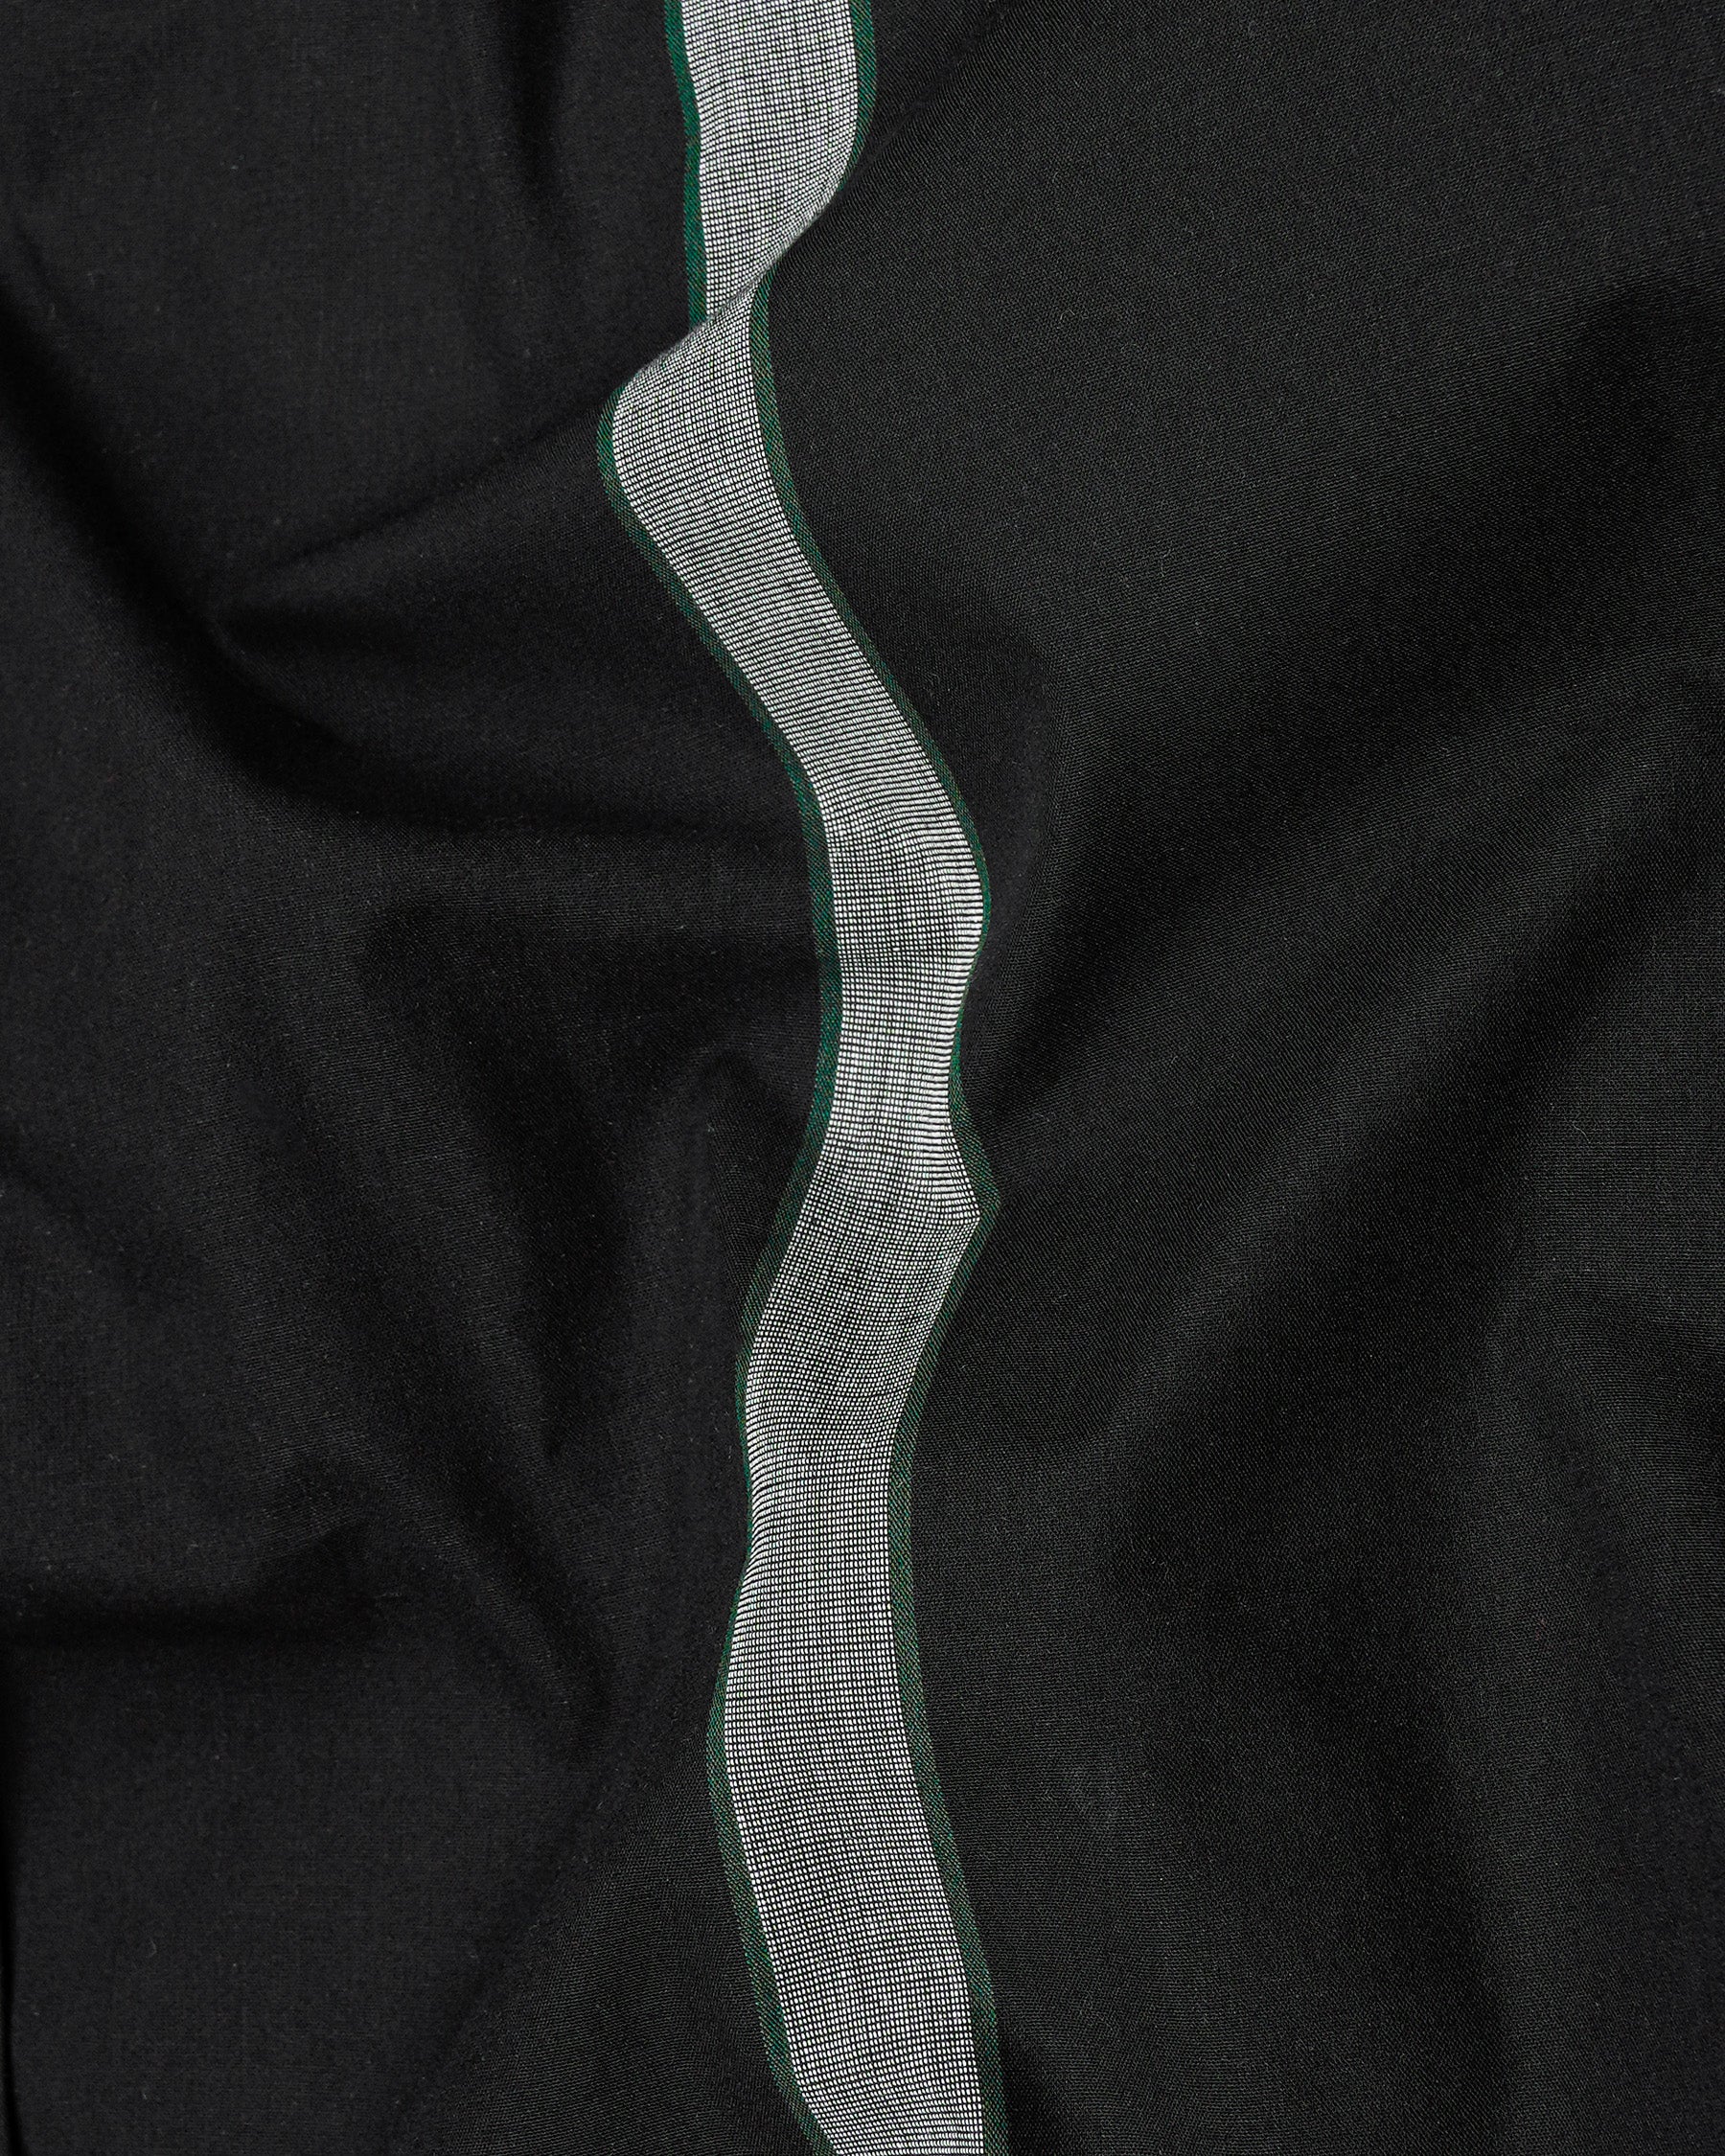 Jade Black With Gray Striped Premium Cotton Shirt 7947-38, 7947-H-38, 7947-39, 7947-H-39, 7947-40, 7947-H-40, 7947-42, 7947-H-42, 7947-44, 7947-H-44, 7947-46, 7947-H-46, 7947-48, 7947-H-48, 7947-50, 7947-H-50, 7947-52, 7947-H-52